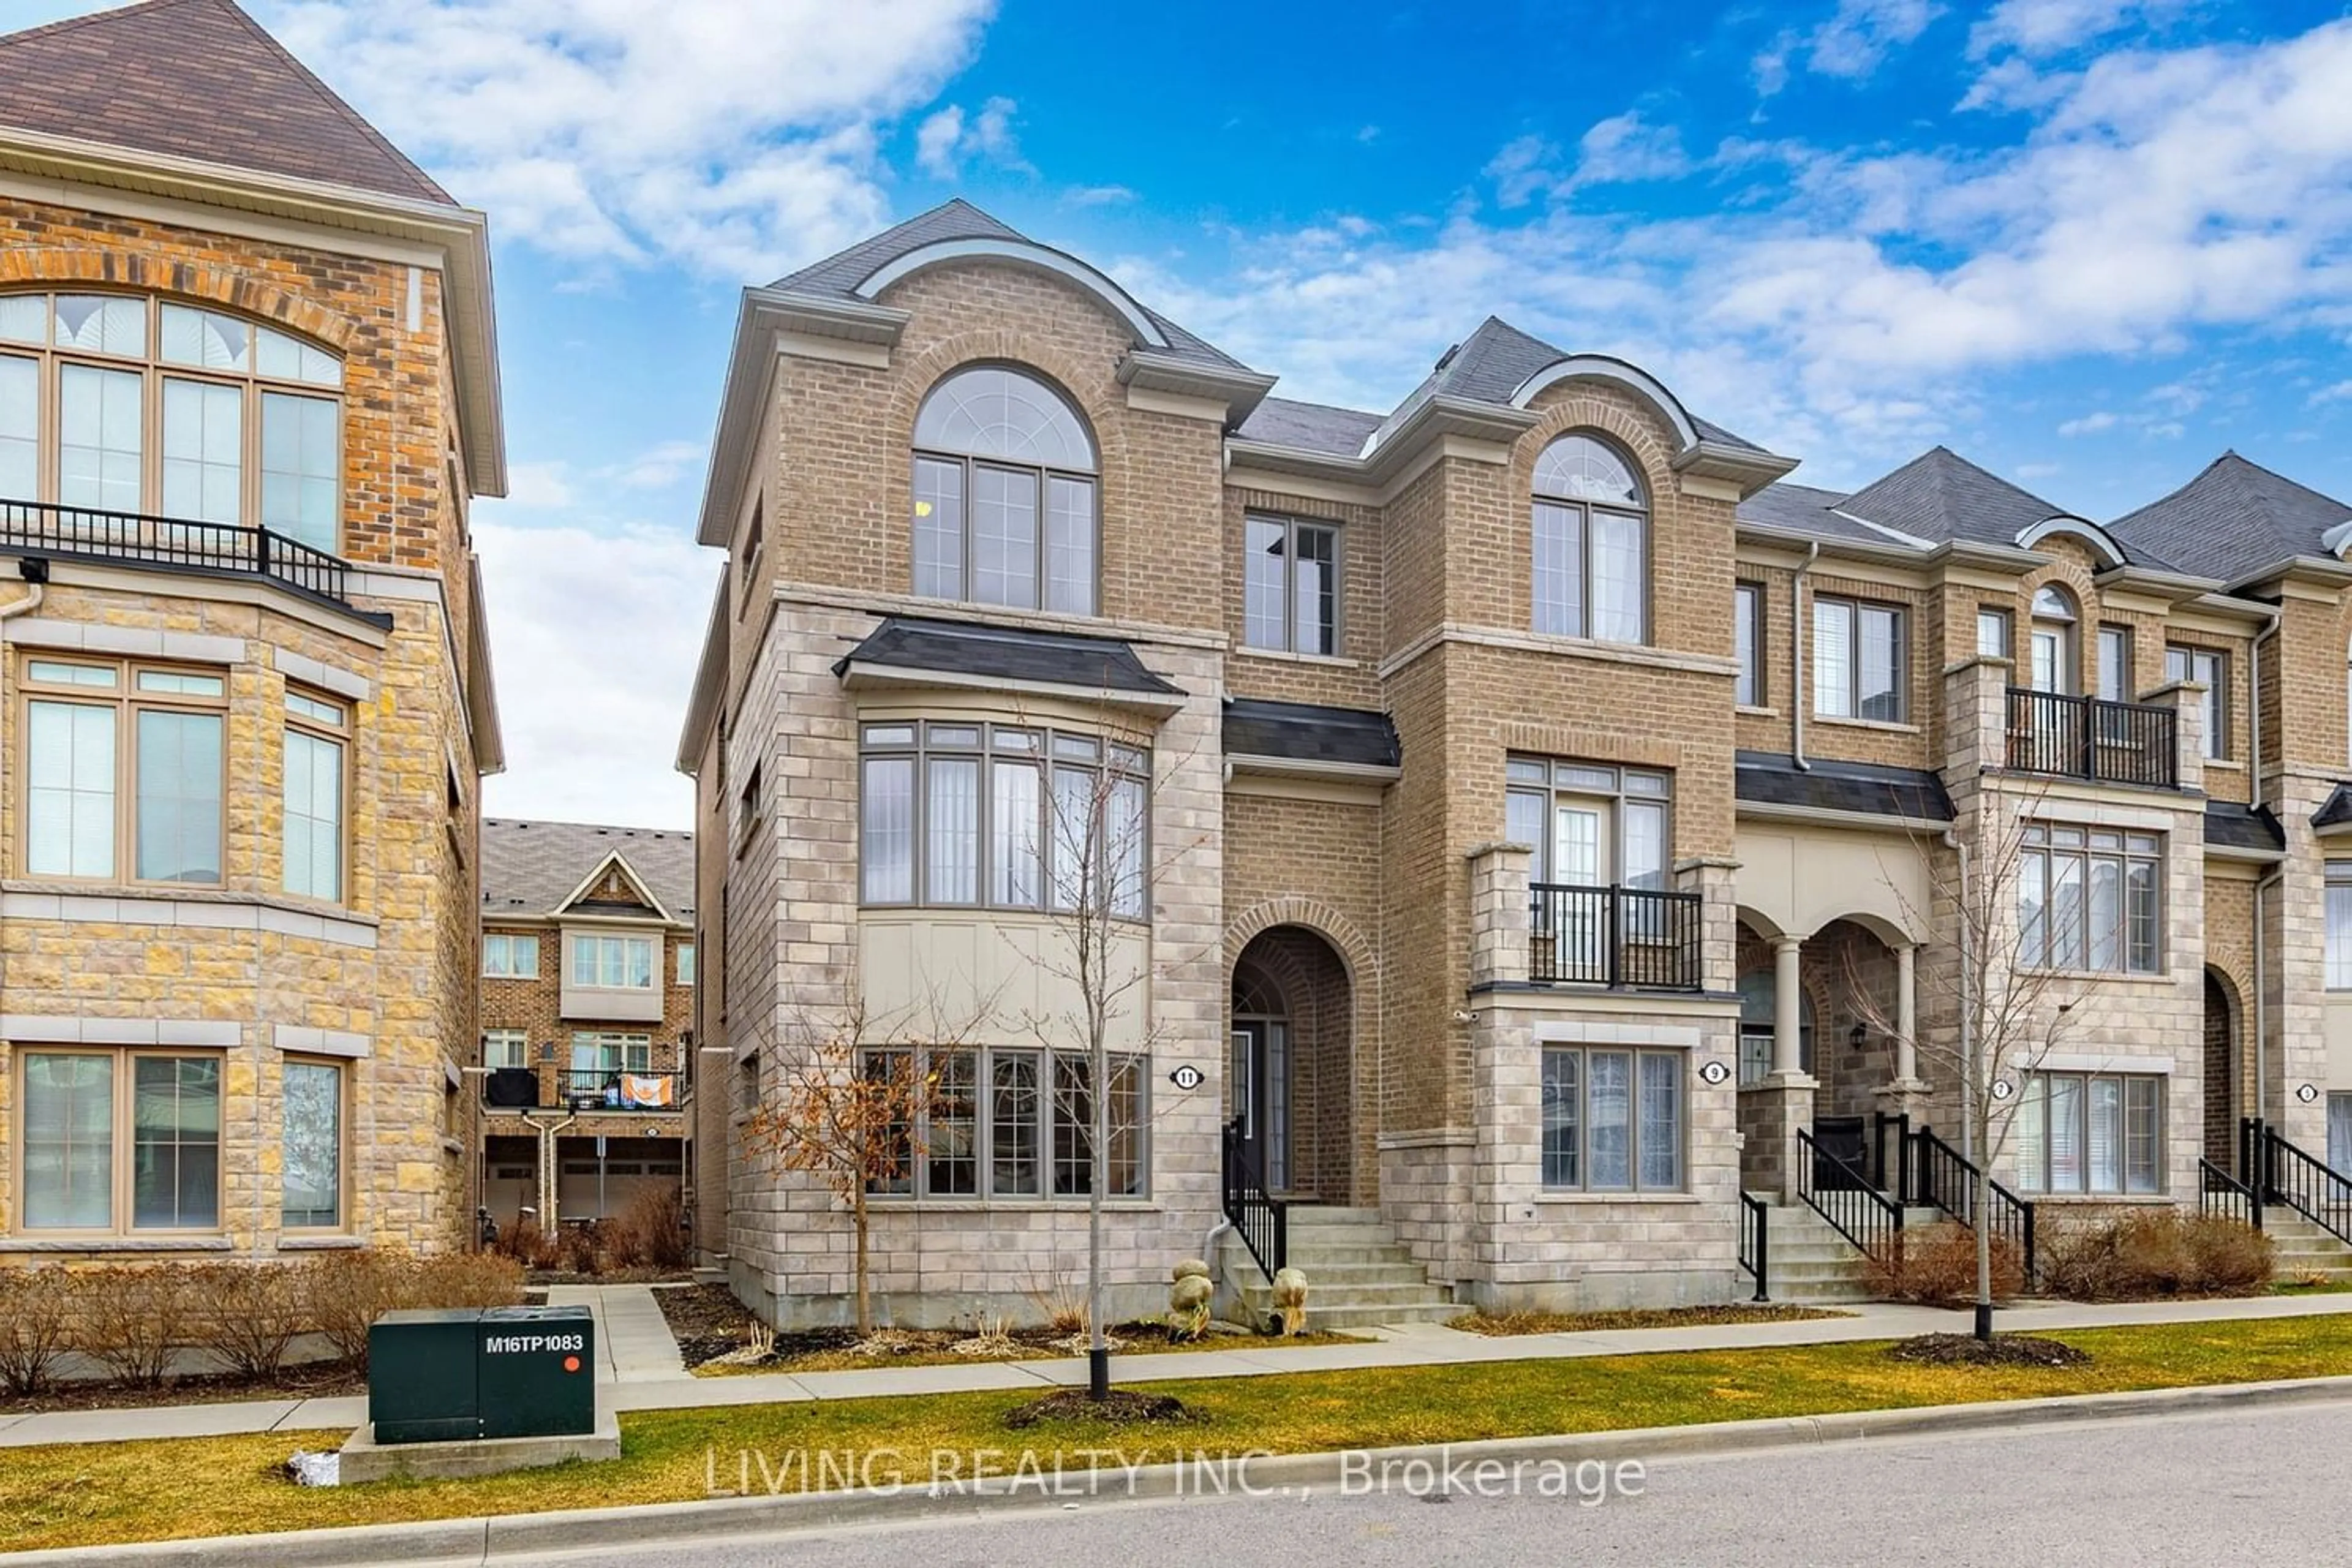 Home with brick exterior material for 11 Rougeview Park Cres, Markham Ontario L3P 3J3